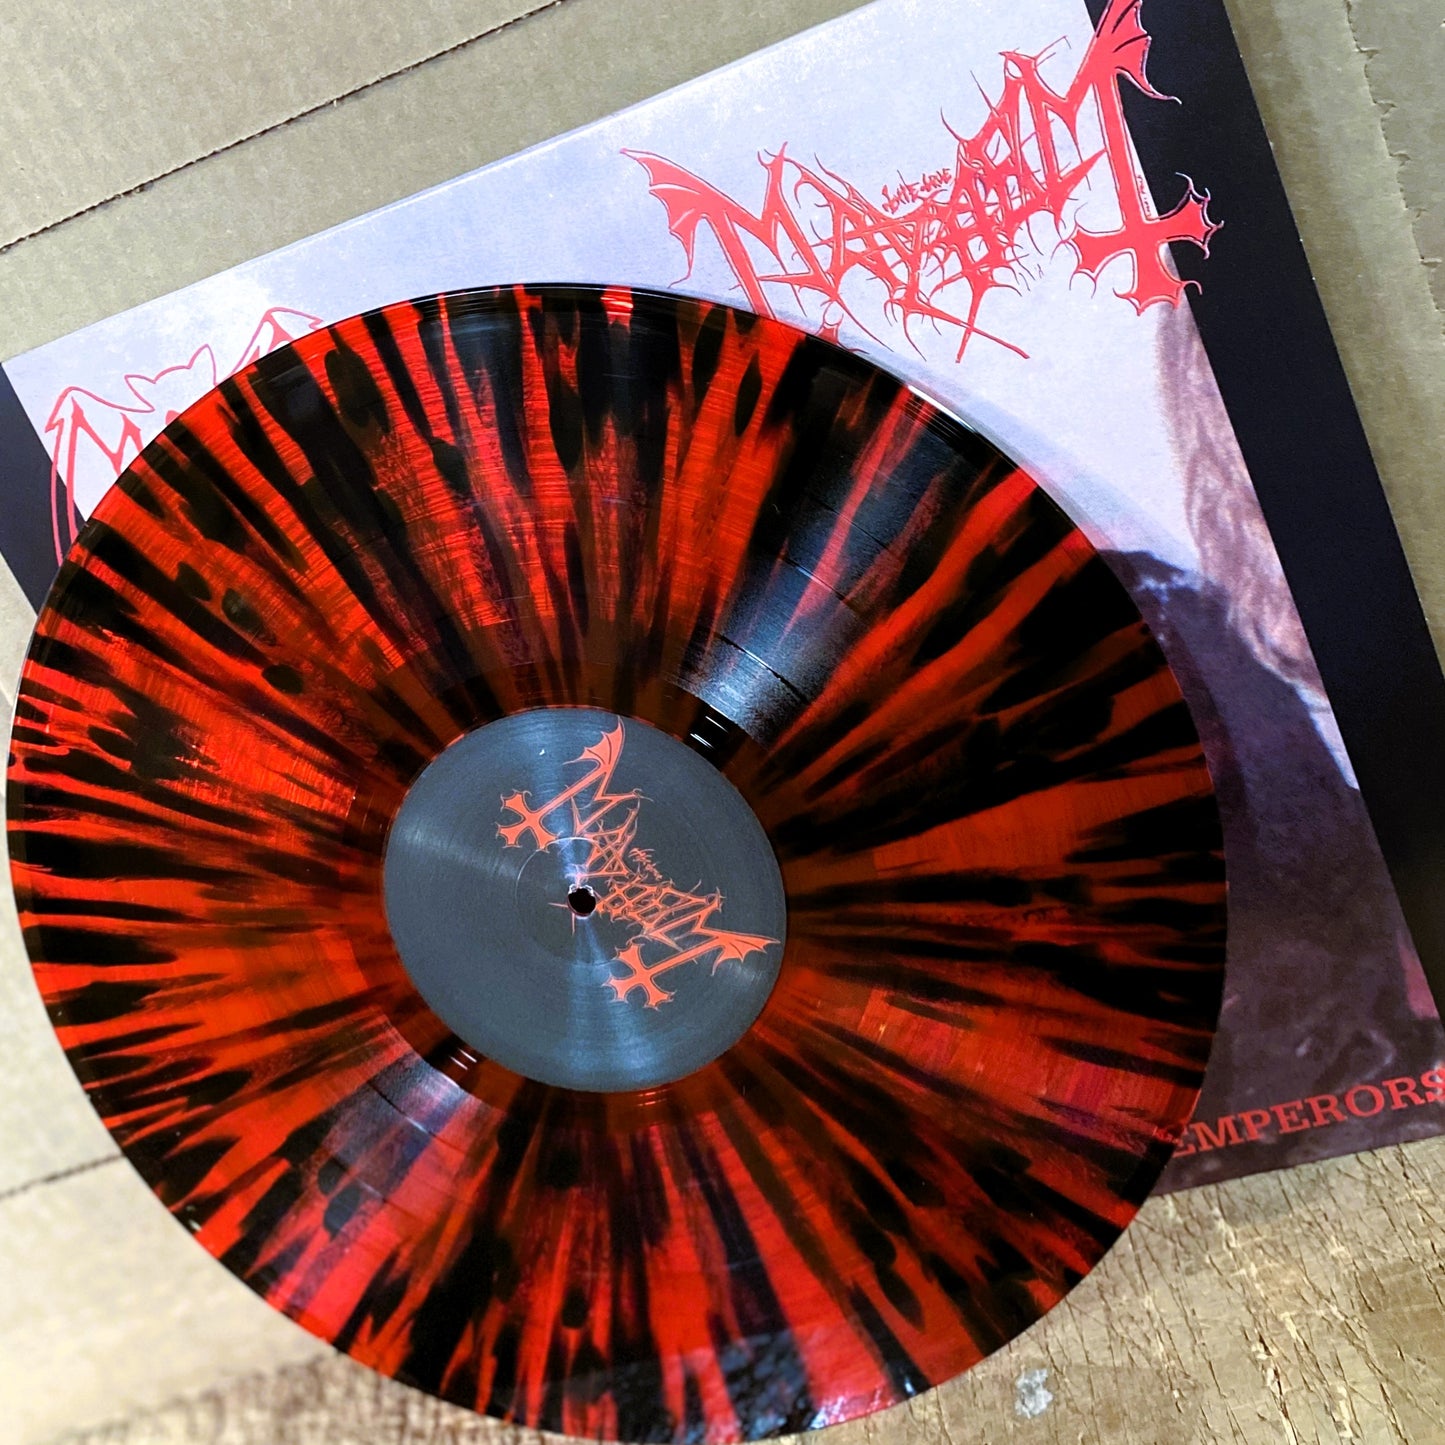 MAYHEM / MORBID – A Tribute To The Black Emperors LP (red splatter vinyl)